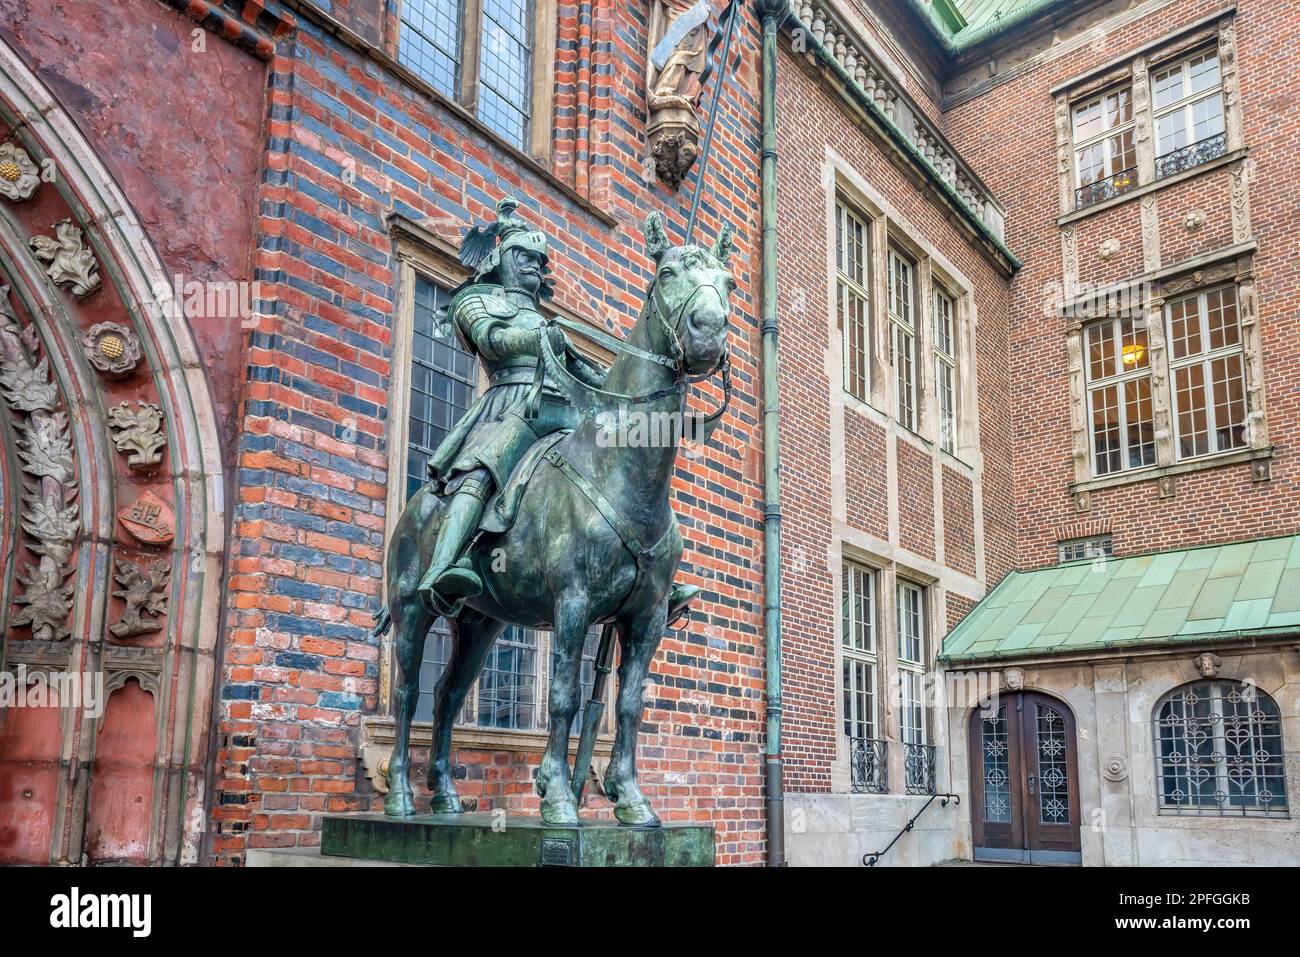 The Heralds (Die Herolde) Sculpture in front of Old Town Hall - Bremen, Germany Stock Photo